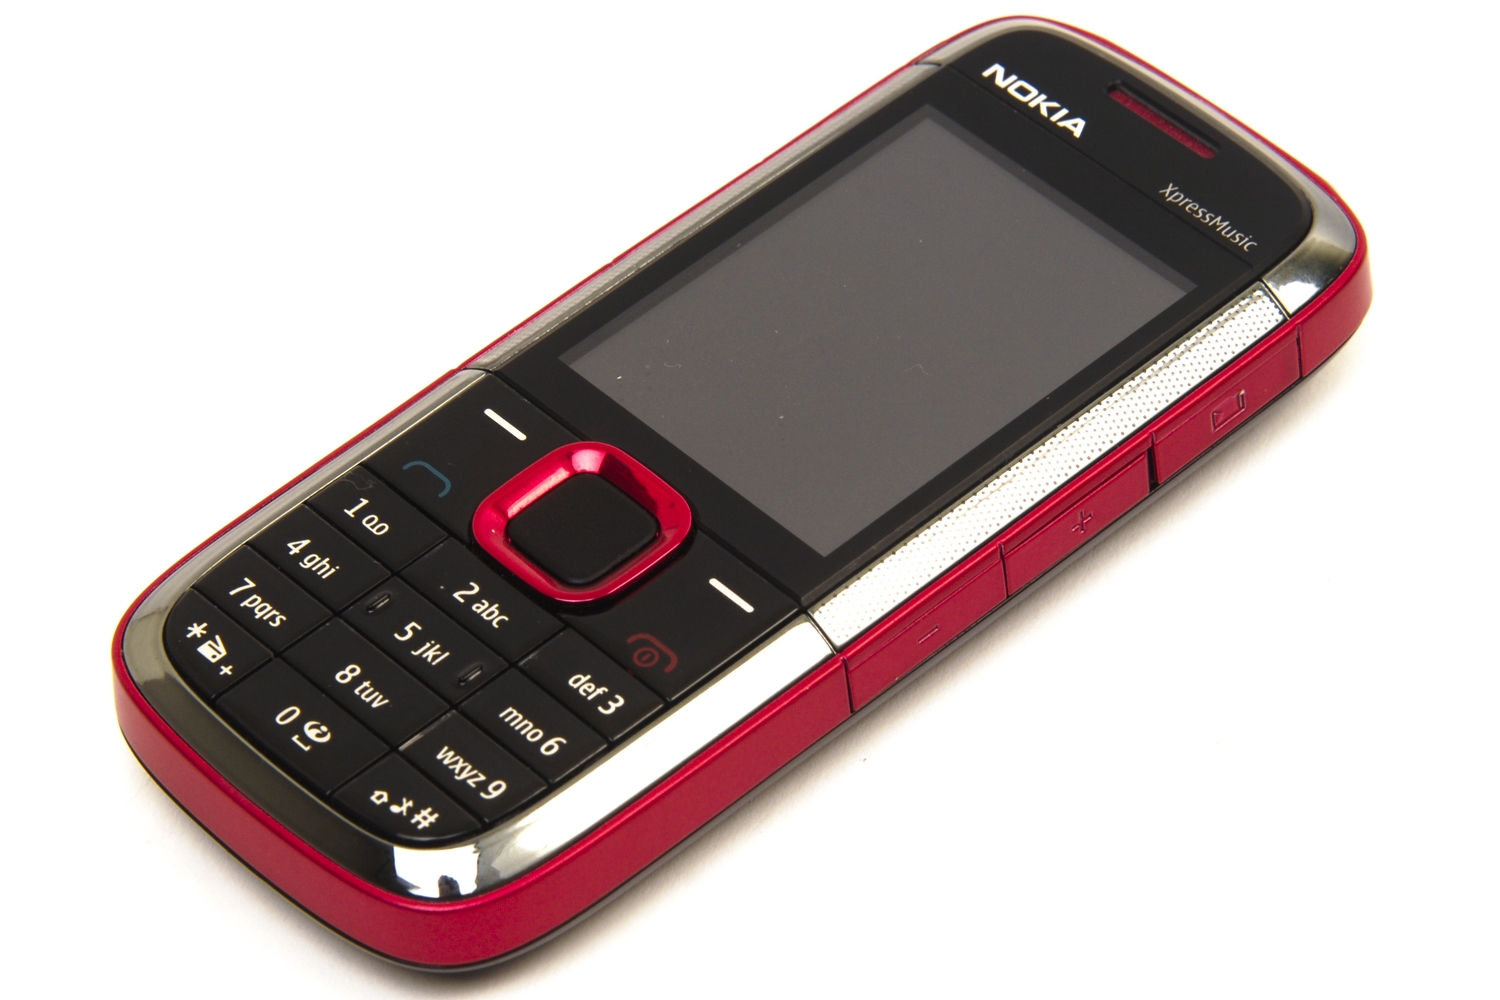 Nokia 5130 XPRESSMUSIC. Nokia XPRESSMUSIC 5130 C-2. Nokia 5130 Classic. Nokia Express Music 5130.